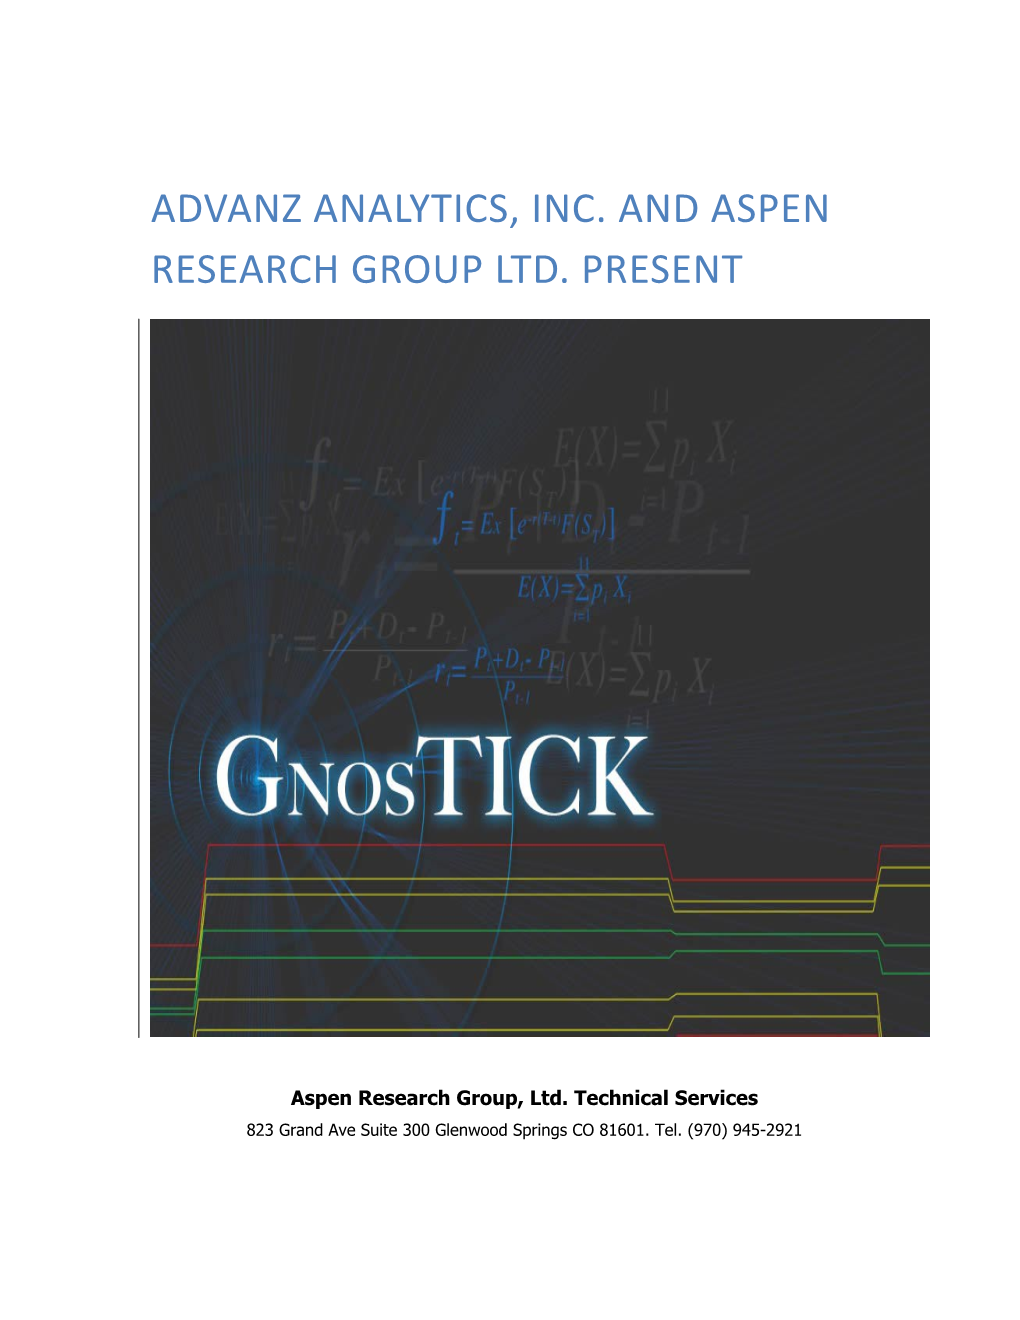 Advanz Analytics, Inc. and Aspen Research Group Ltd. Present